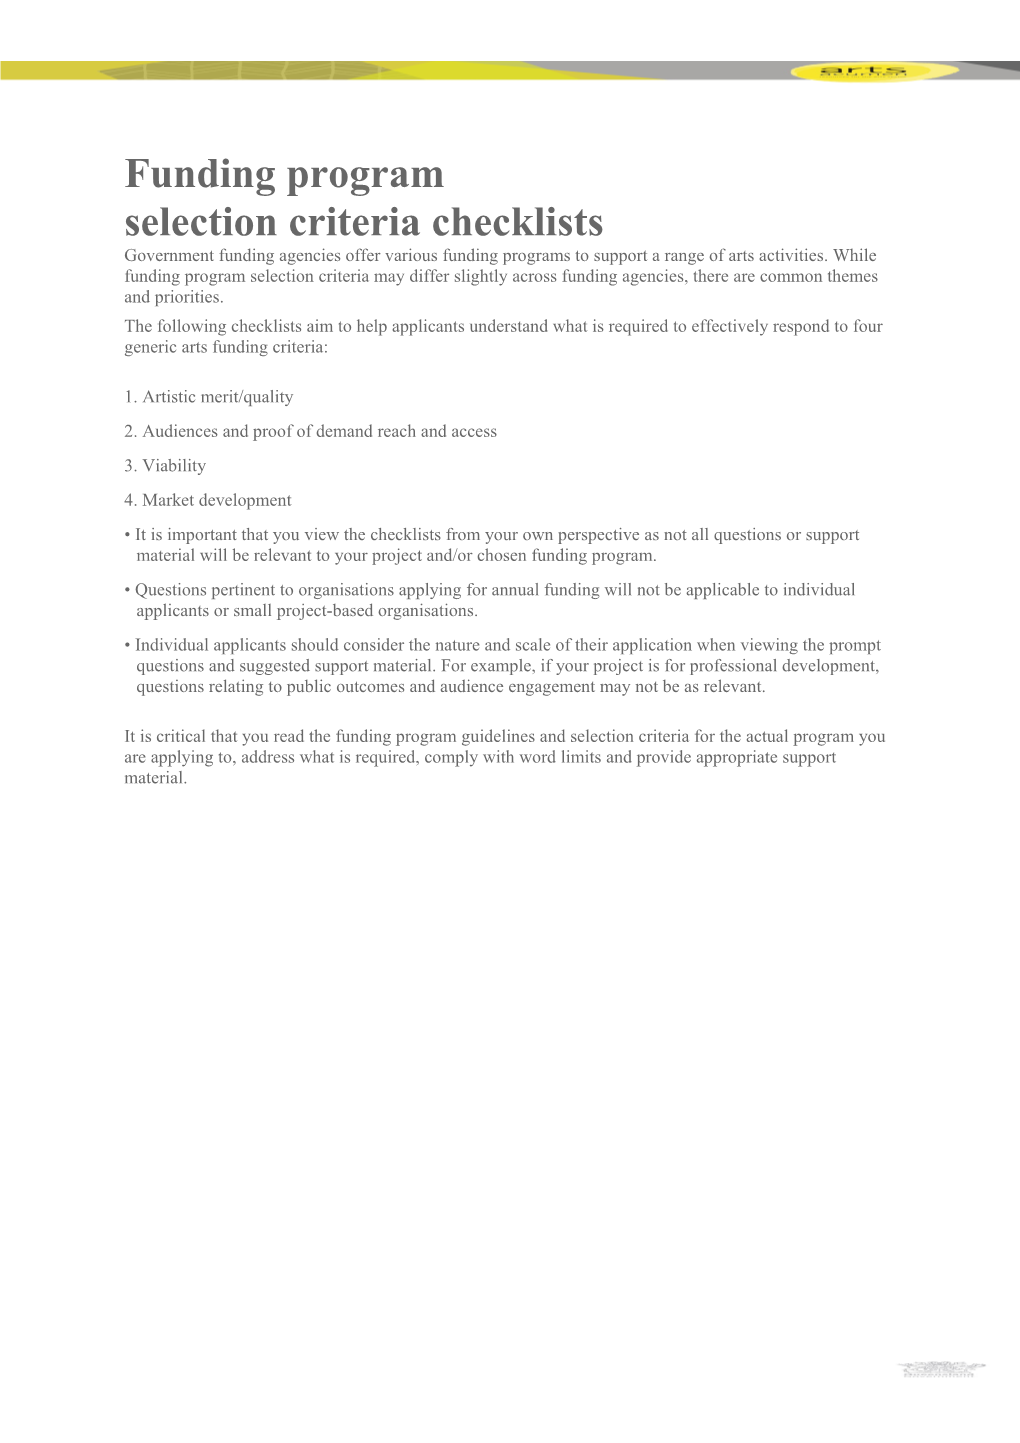 Funding Program Selection Criteria Checklists